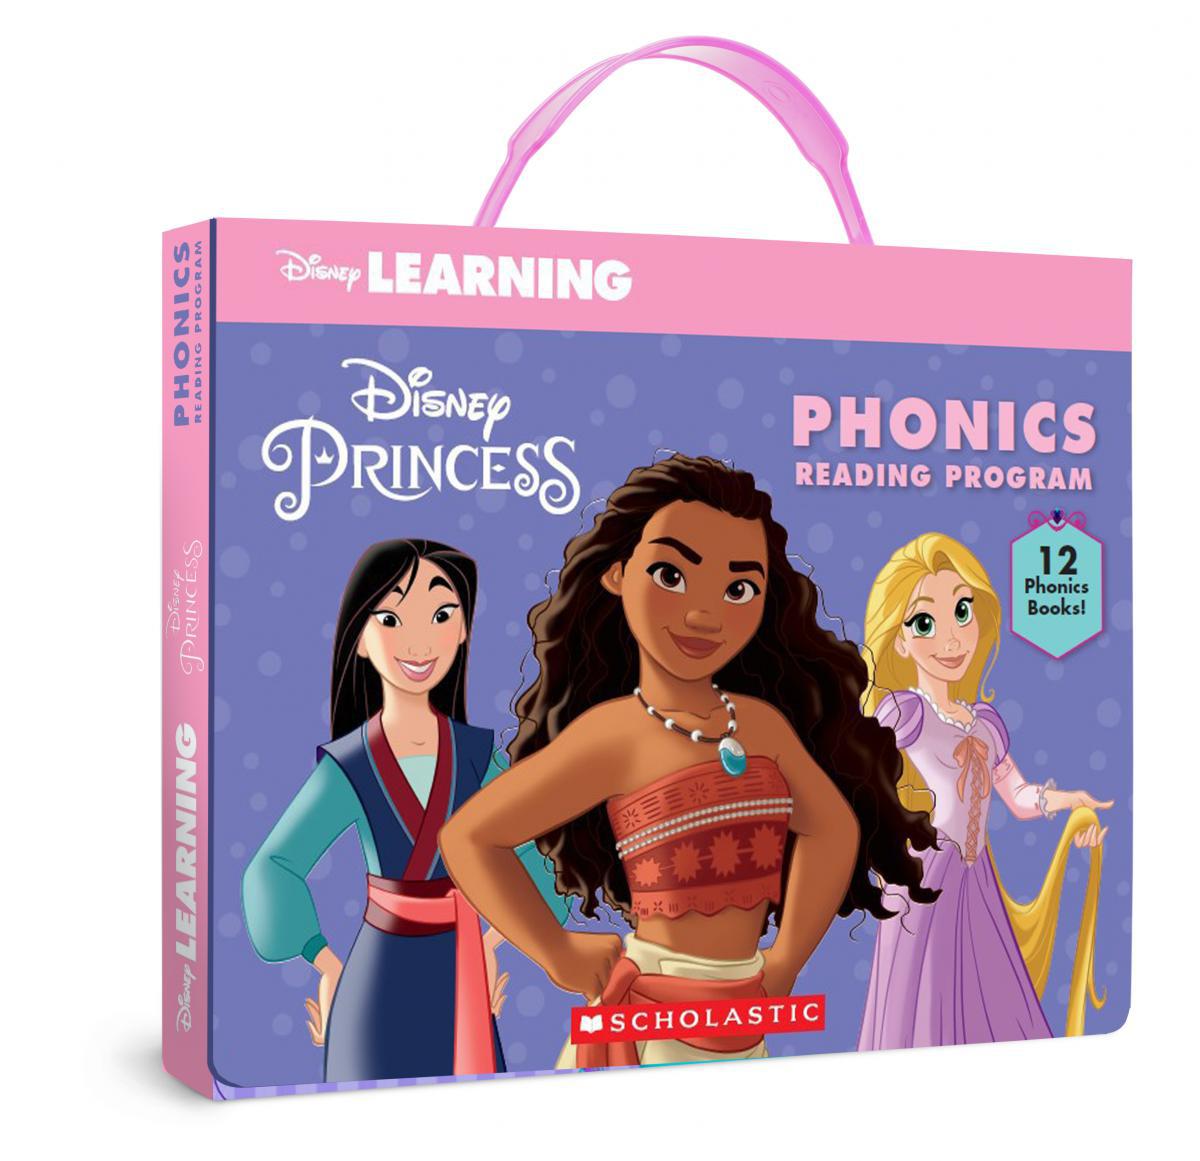  Disney Princess: Phonics Reading Program Boxed Set 